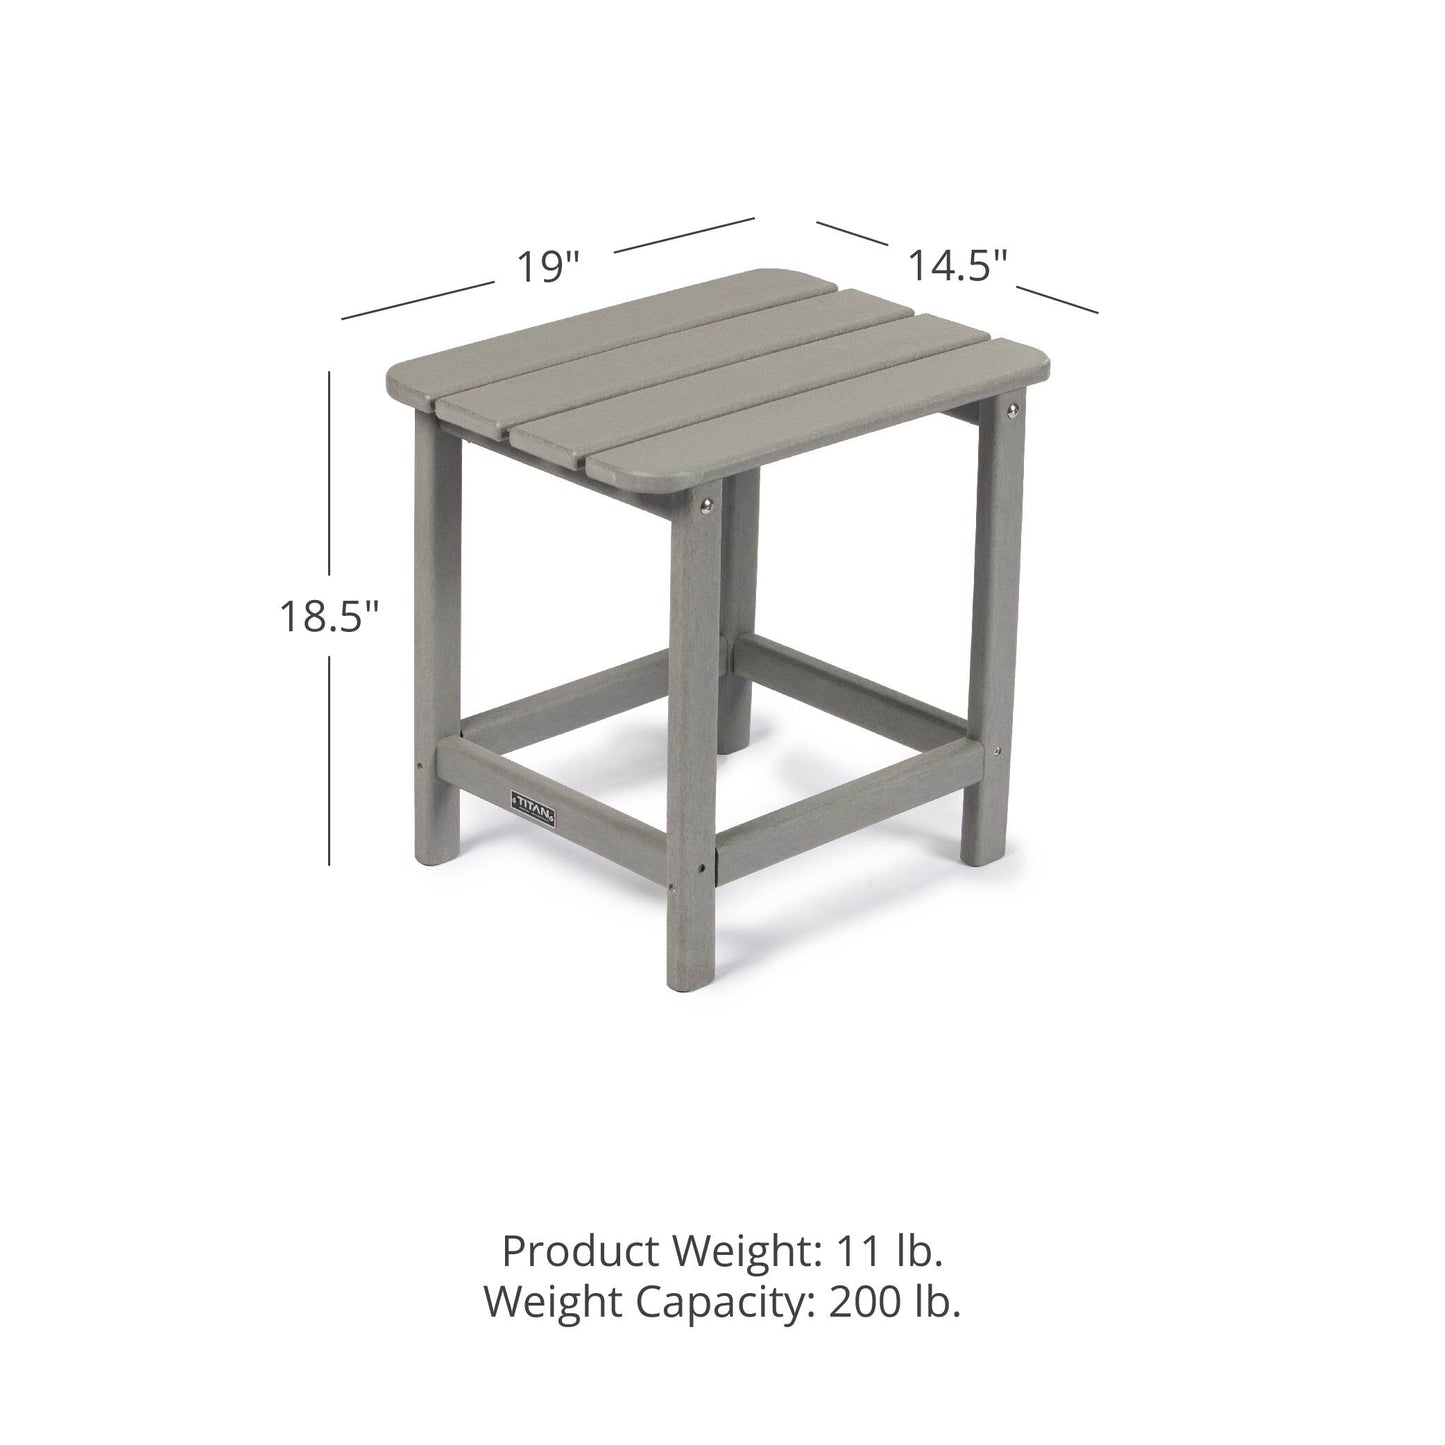 Everwood Hilltop Side Table - Table Color: Platinum Grey | Platinum Grey - view 14